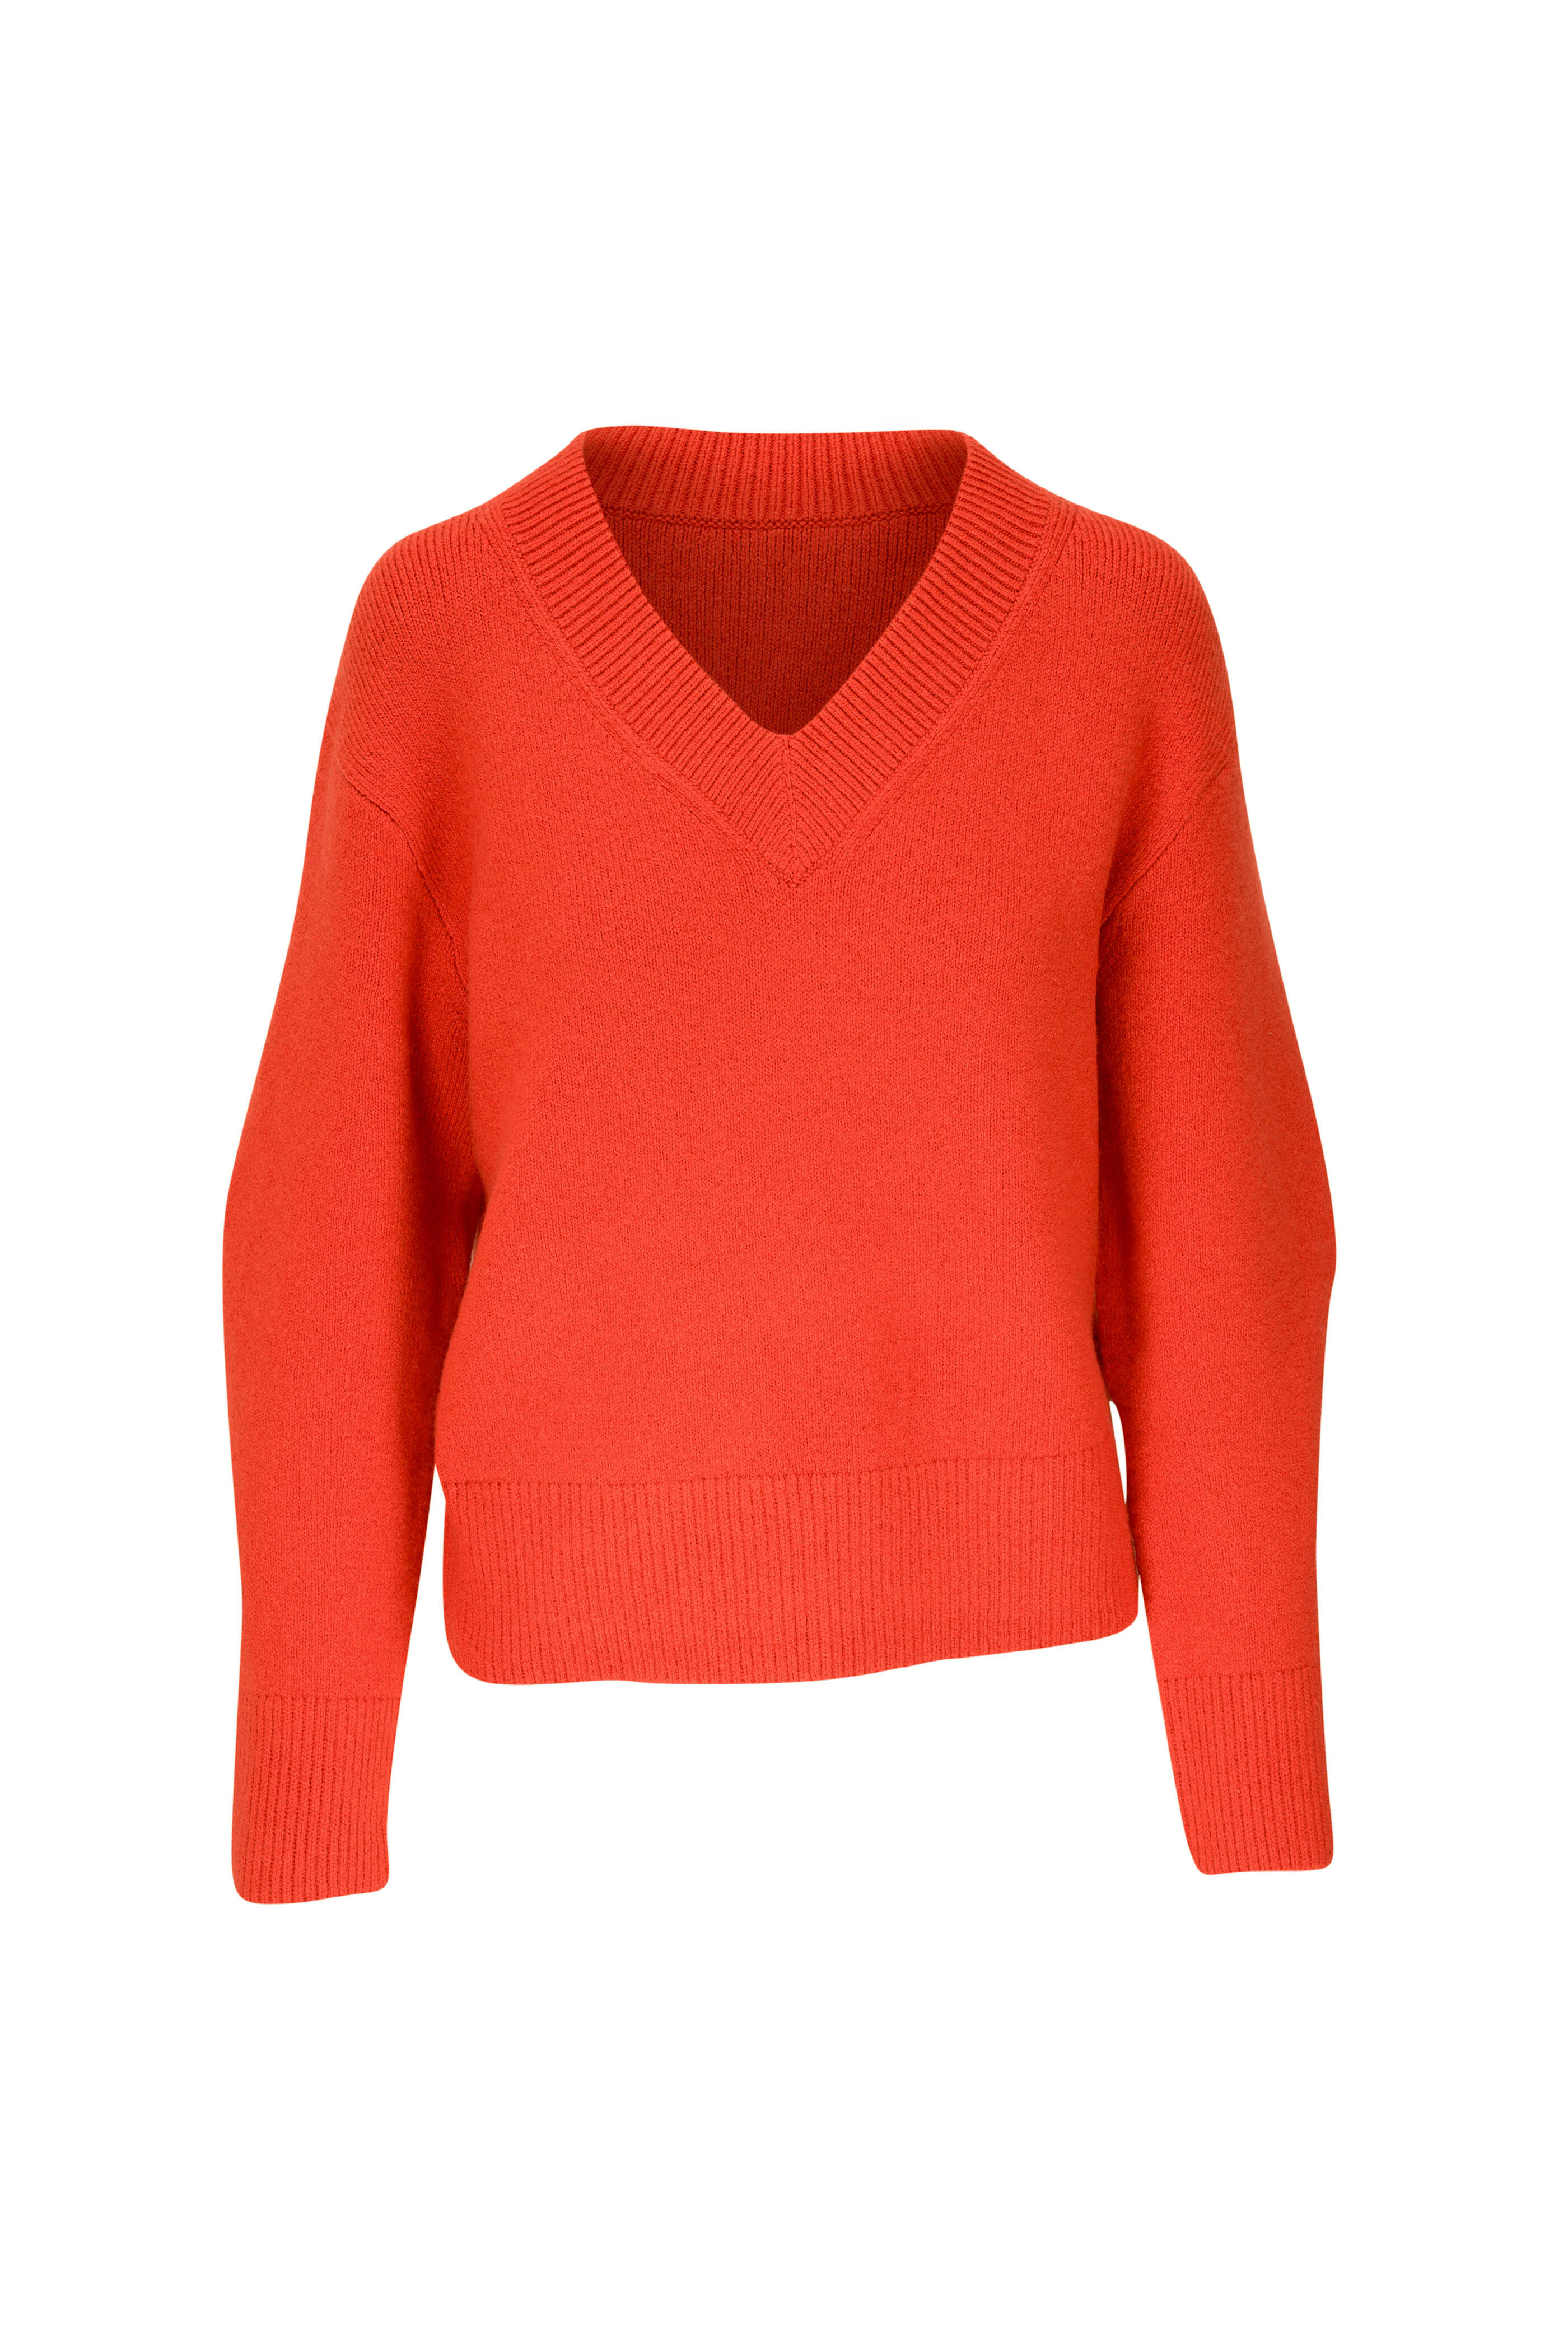 Vince - Vermillion Wool & Cashmere V-Neck Sweater